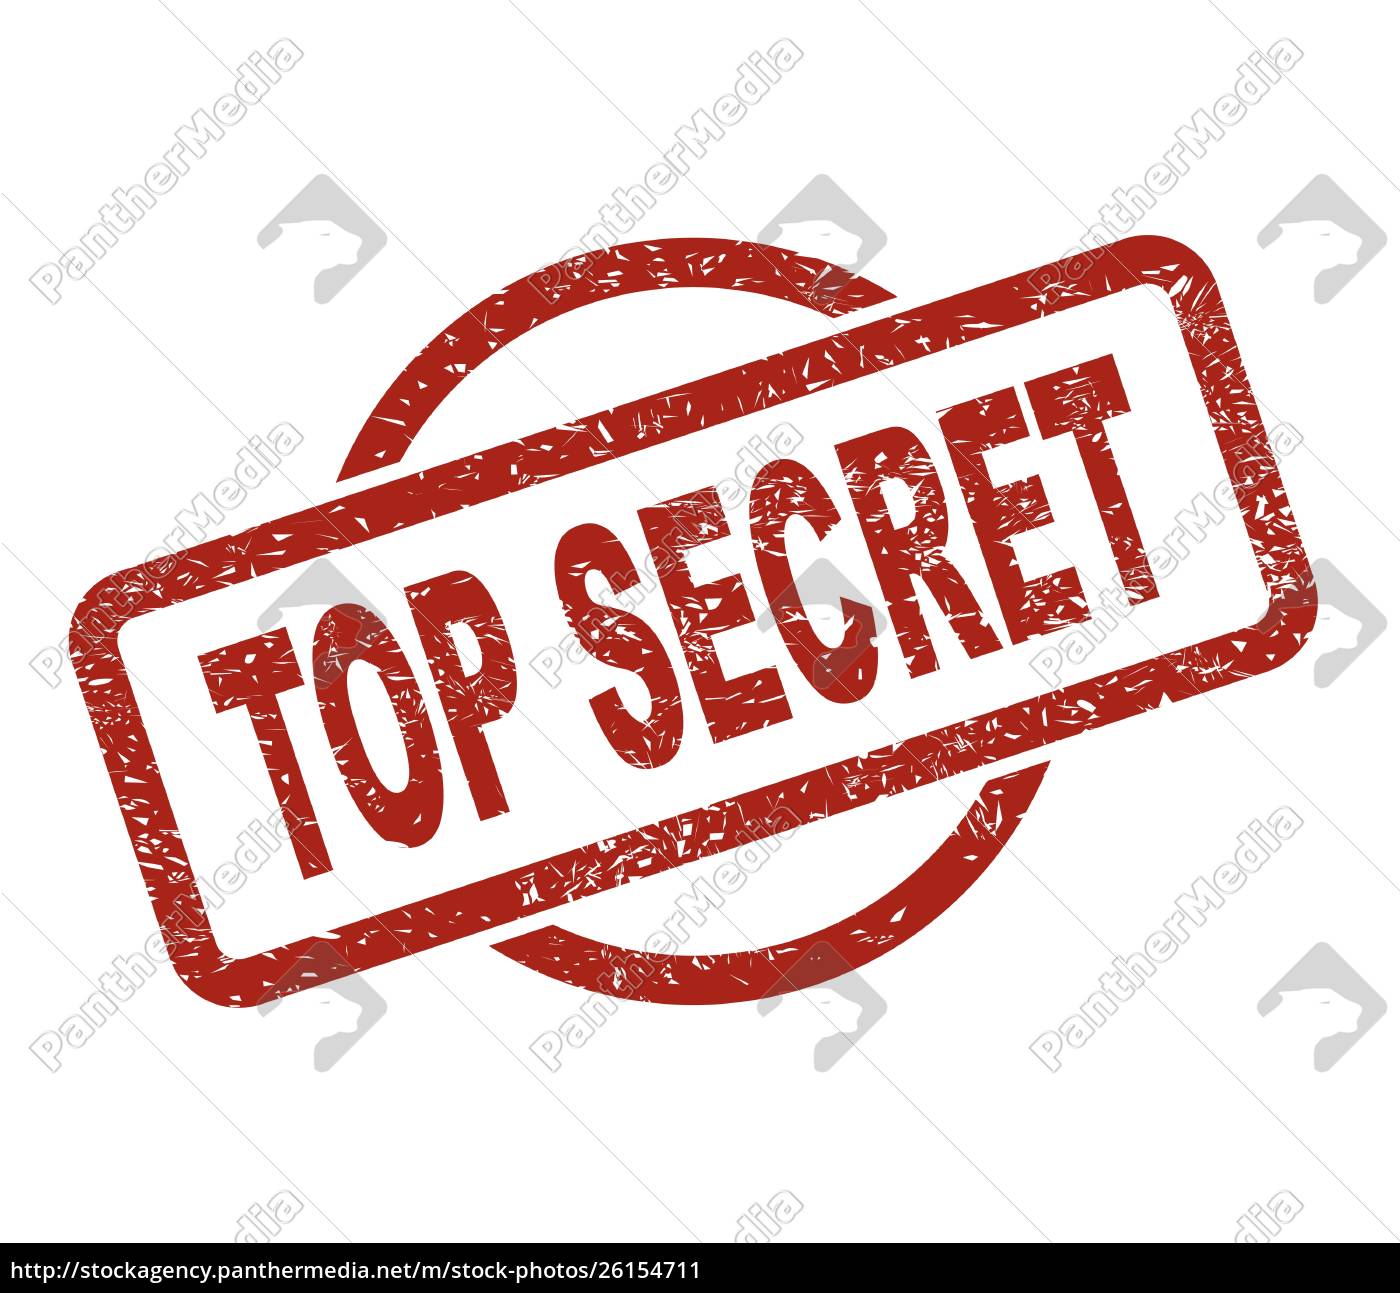 Secret What is